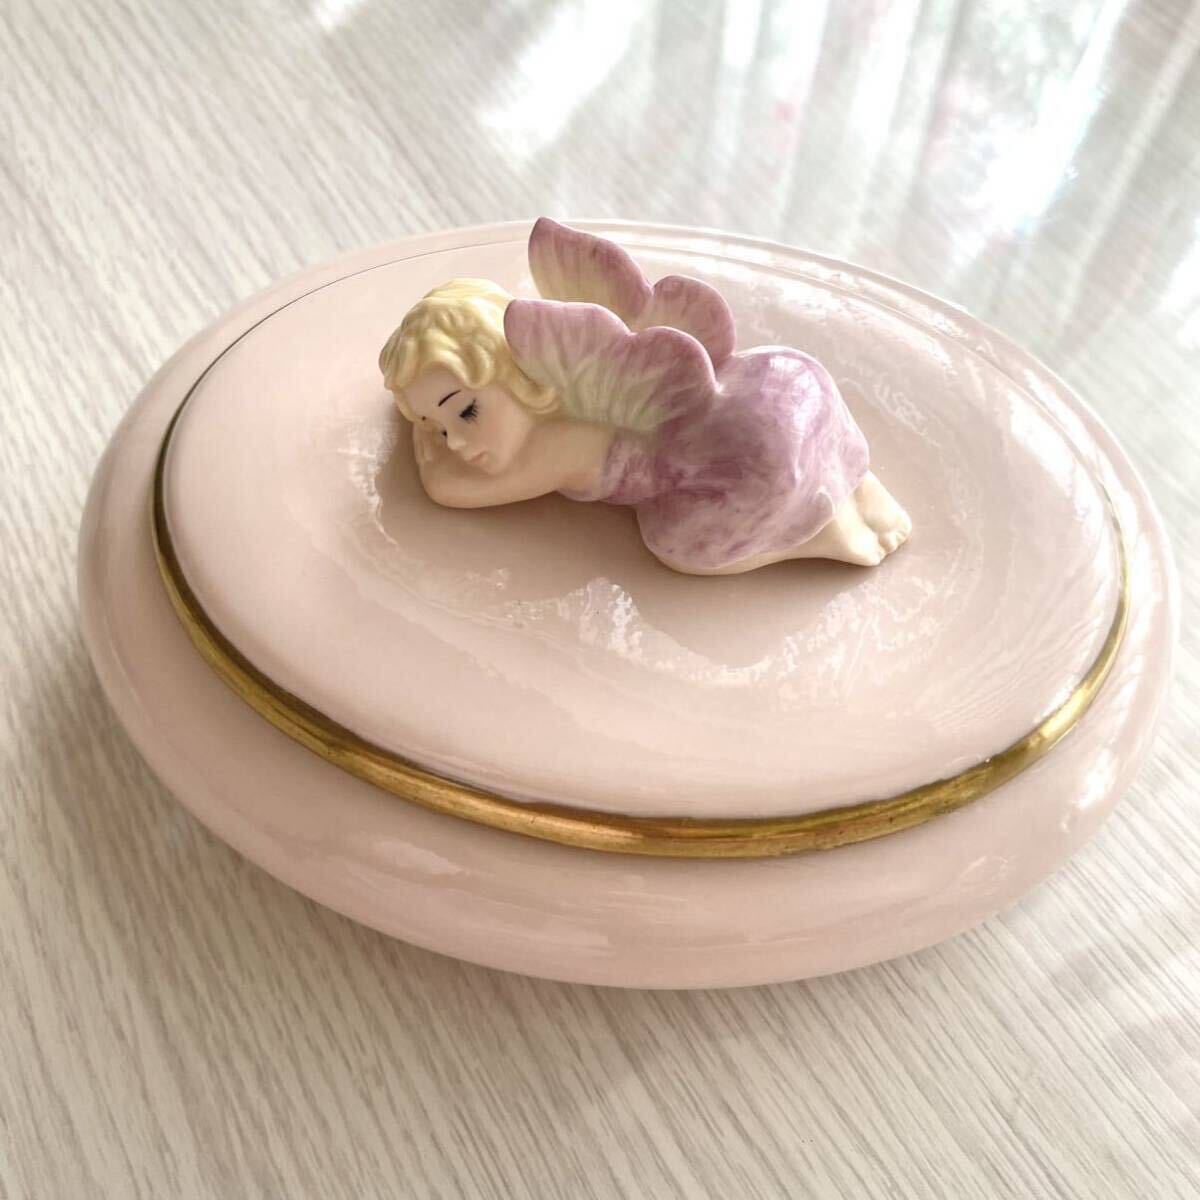 Atlantic Mold vintageフラワーフェアリー 花の妖精 陶器製 楕円蓋物 寝顔がとても可愛い妖精の小物入れ 置物 バタフライ フェアリー好きの画像3